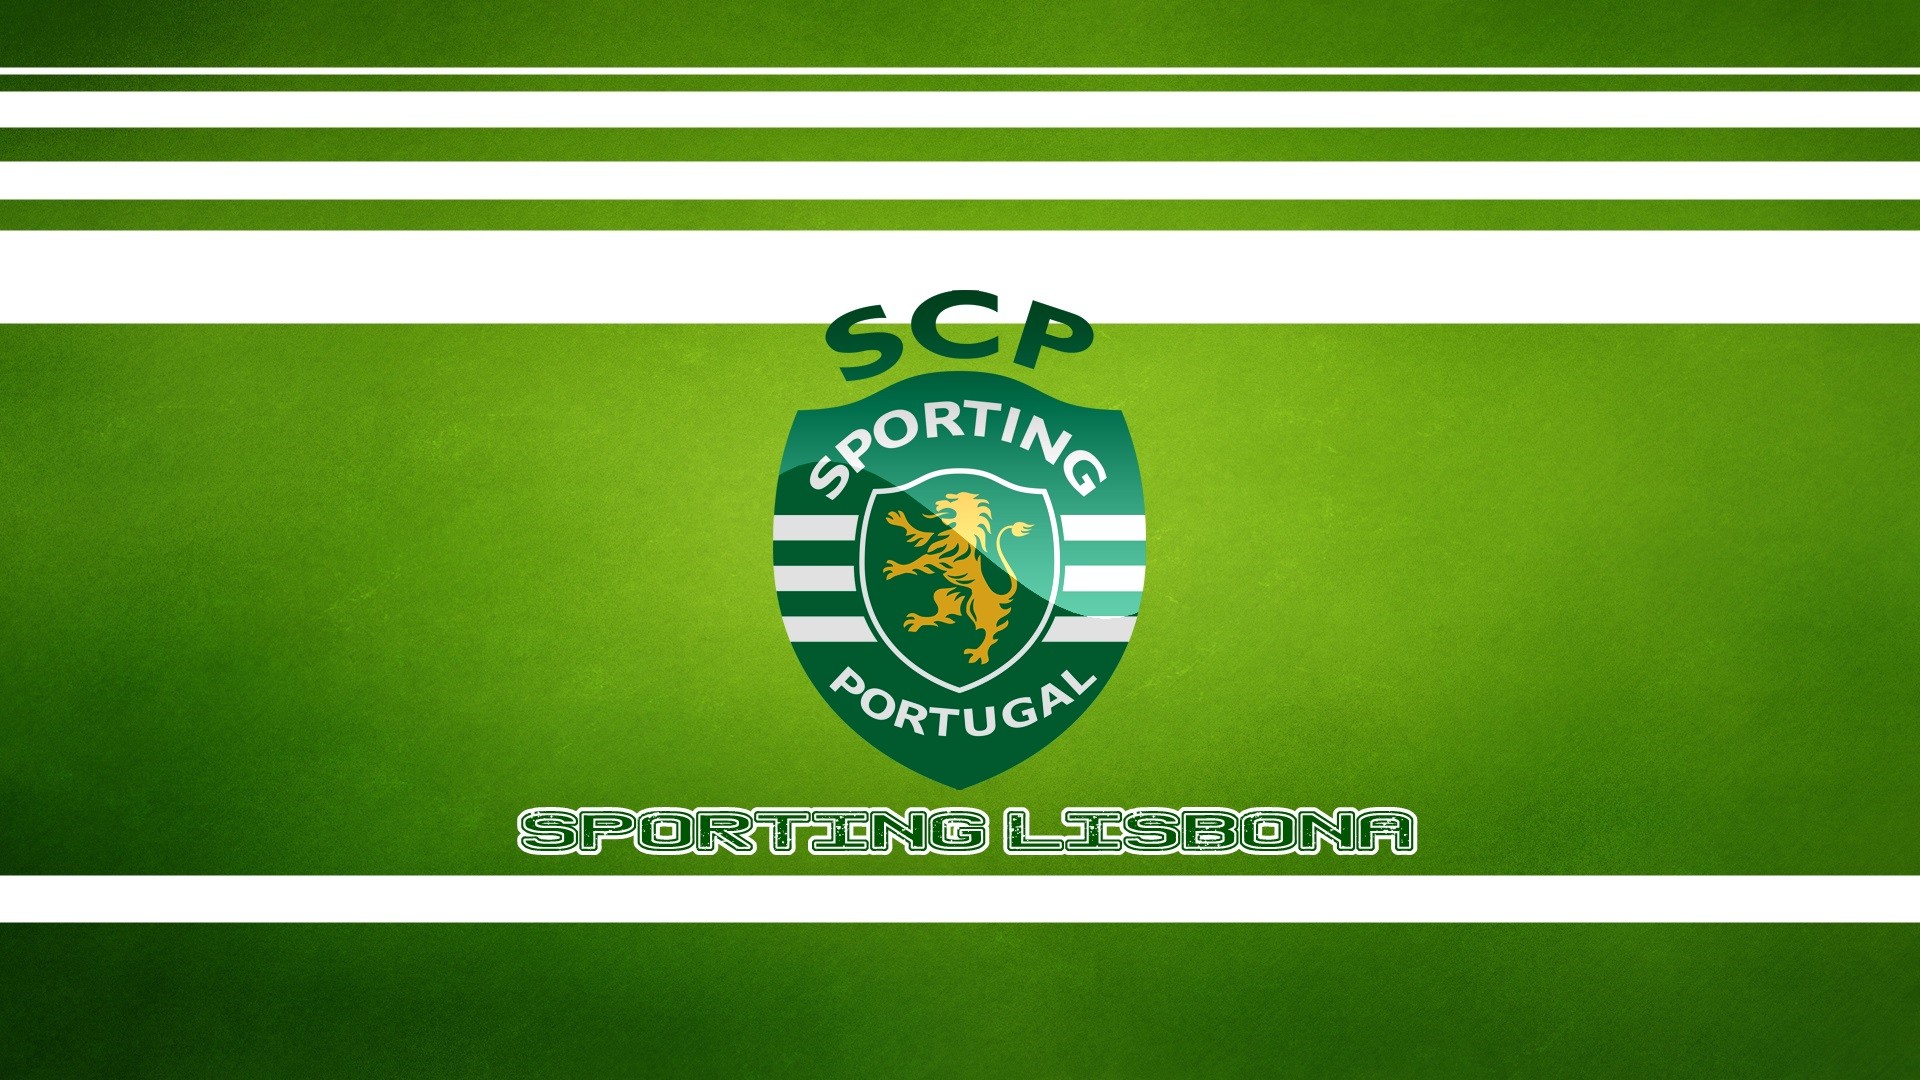 Sporting Lisbona, Soccer Clubs, Soccer, Sports, Portugal Wallpaper